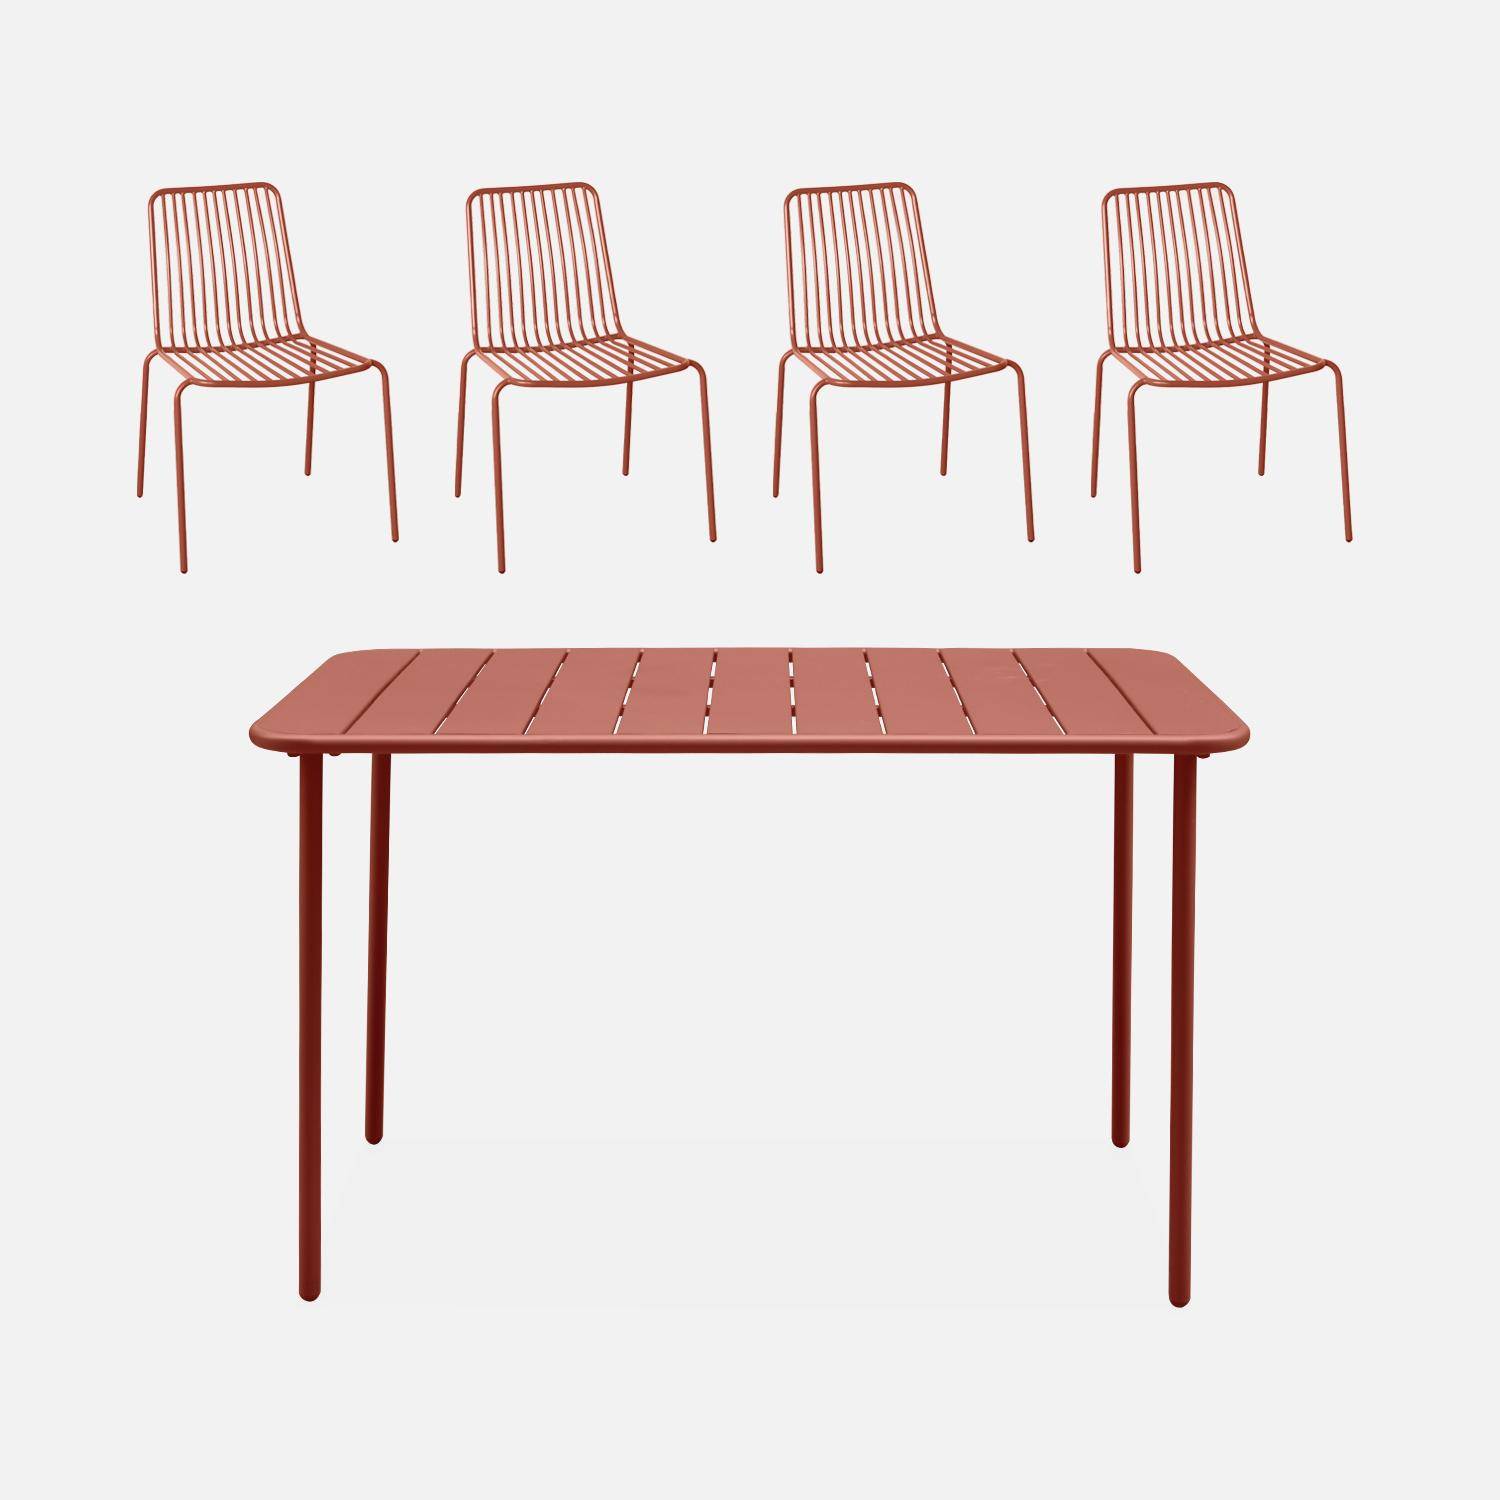 Table de jardin métal + 4 chaises terracotta empilables,sweeek,Photo1